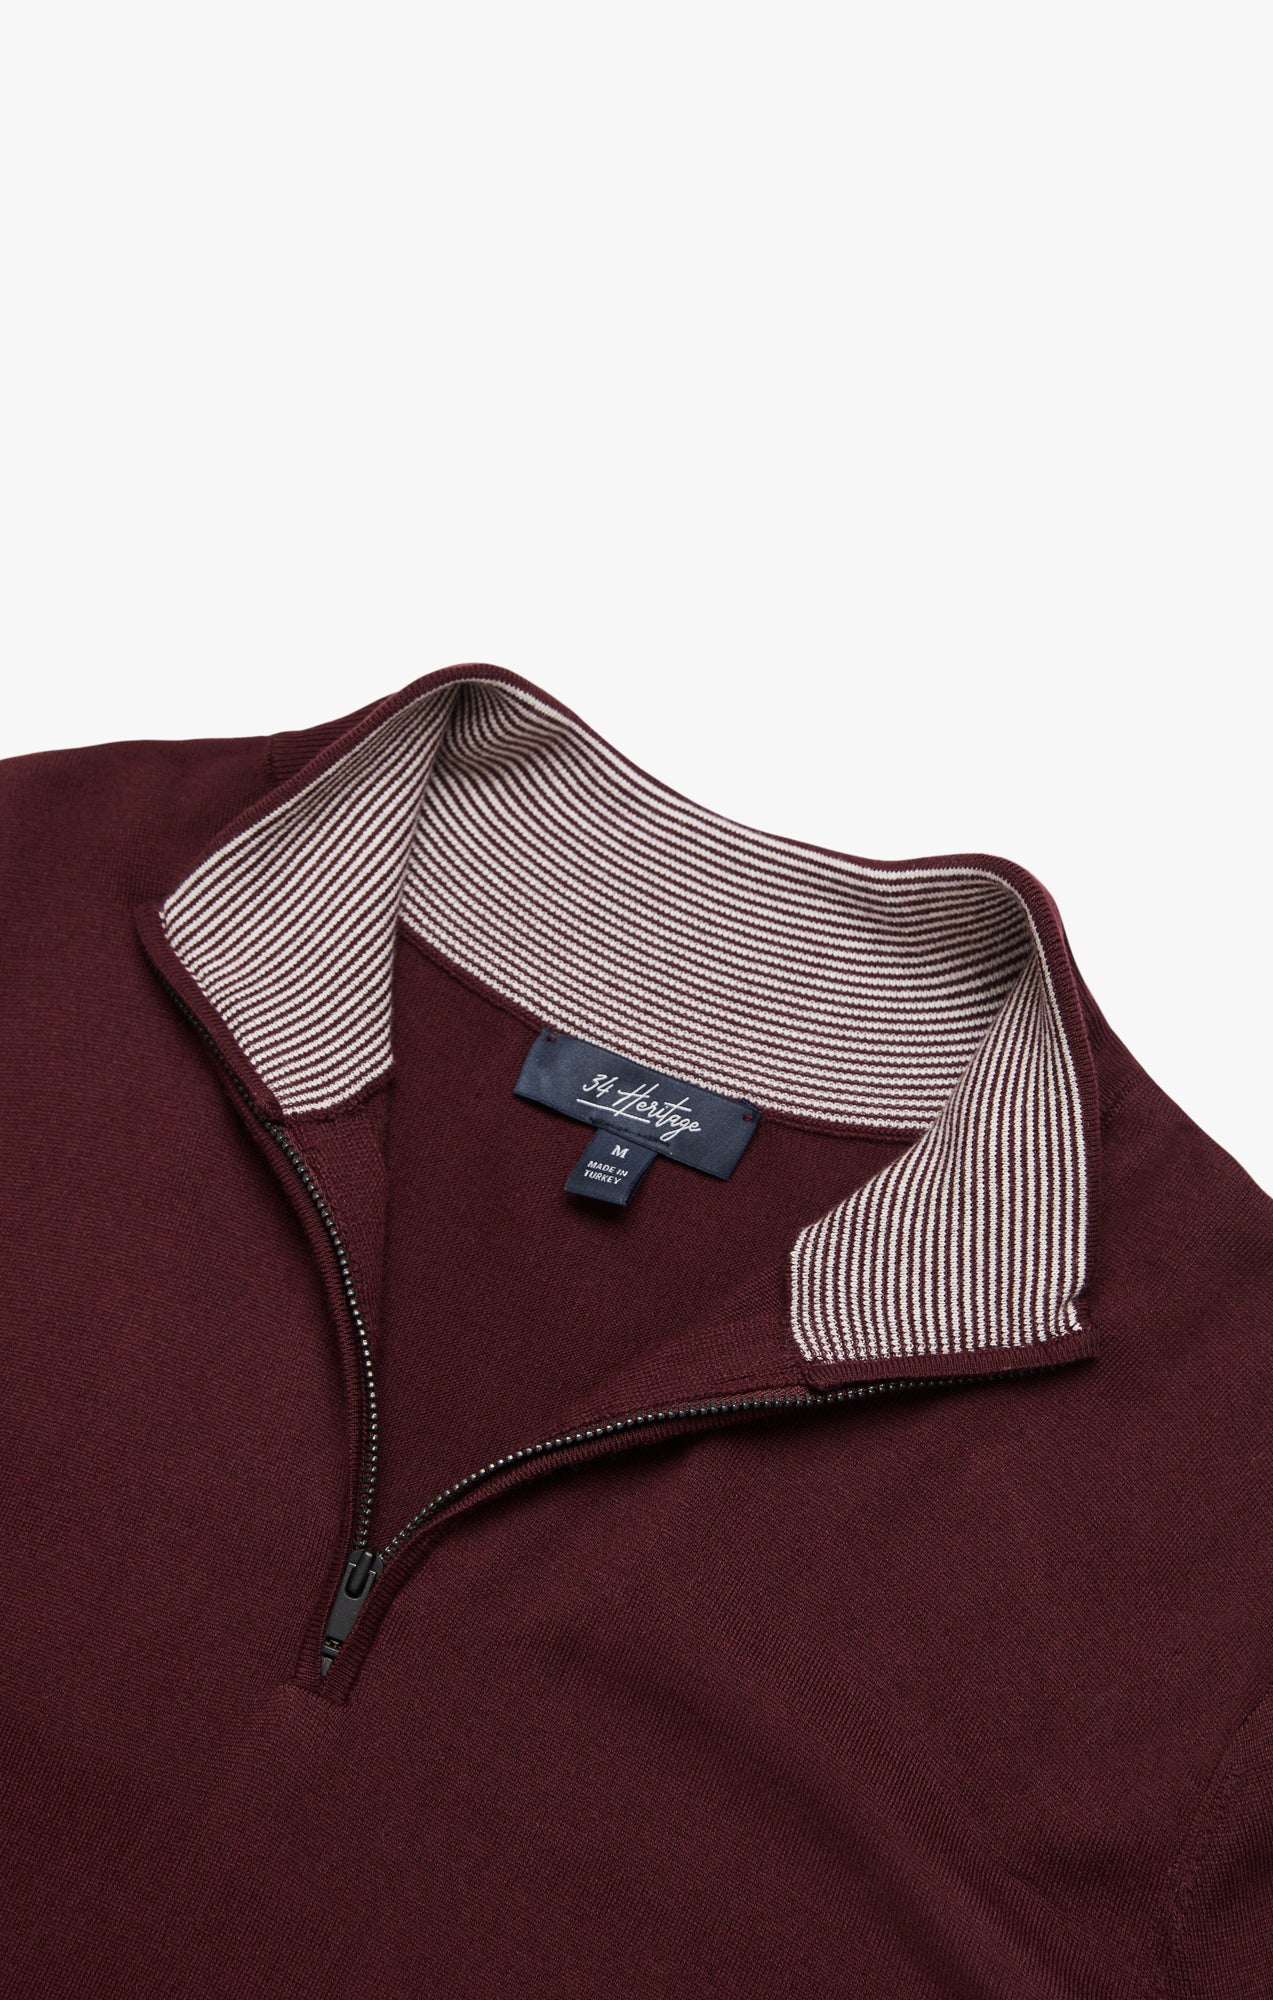 Quarter Zip Sweater In Decadent Chocolate Image 9